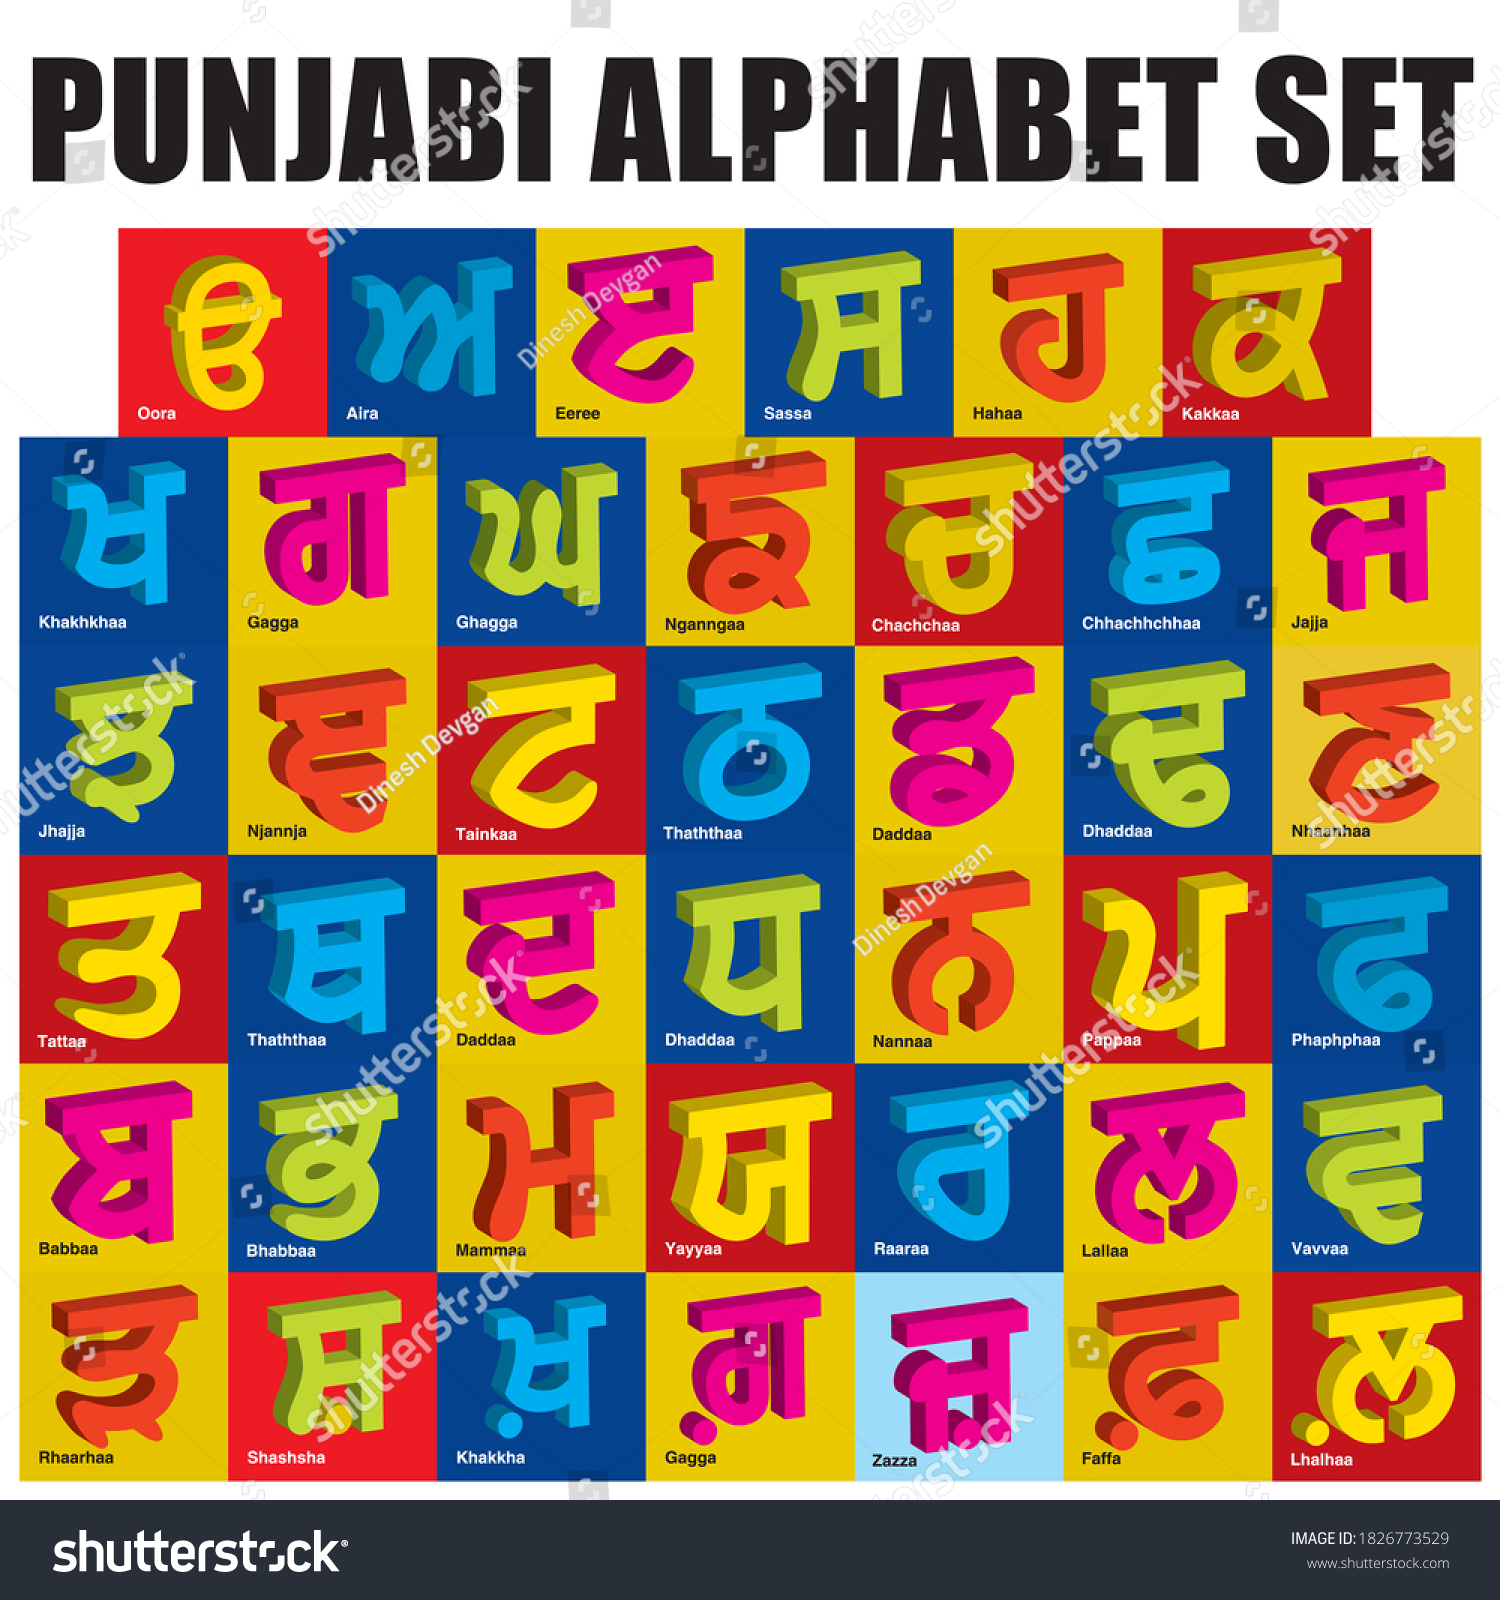 punjabi-alphabet-letter-set-3d-shape-stock-vector-royalty-free